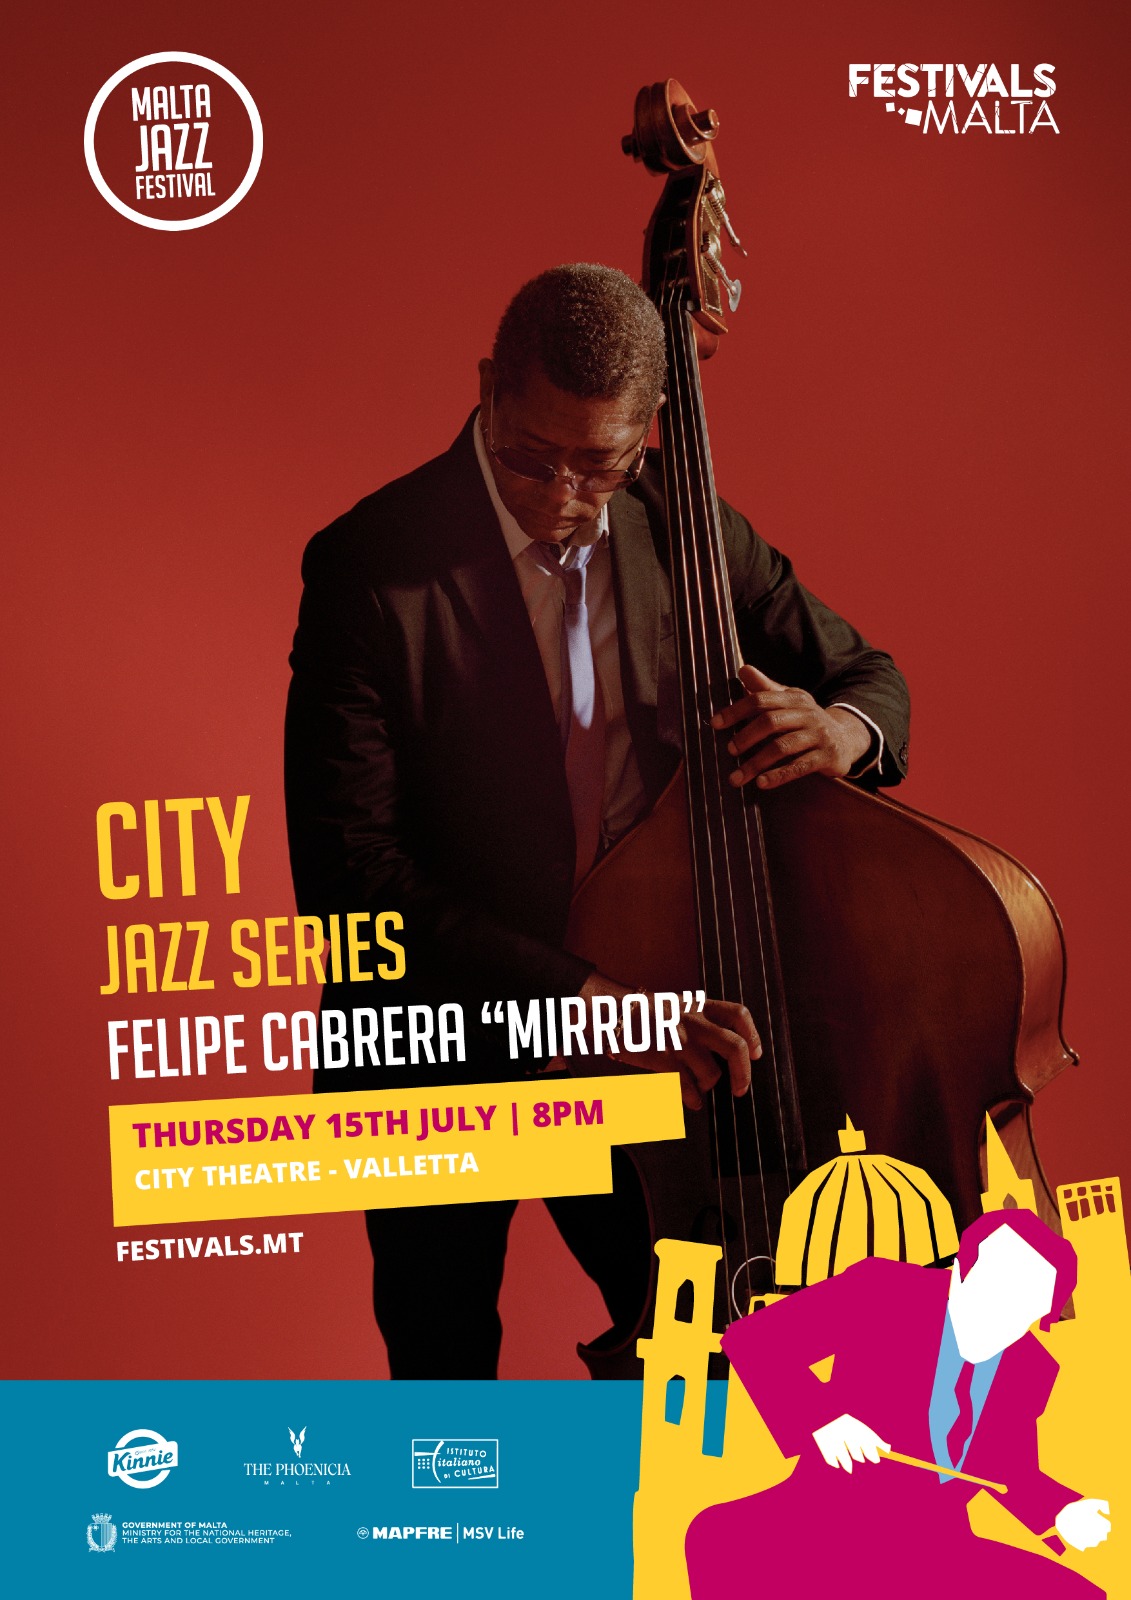 City Jazz Series - Felipe Cabrera "Mirror" poster